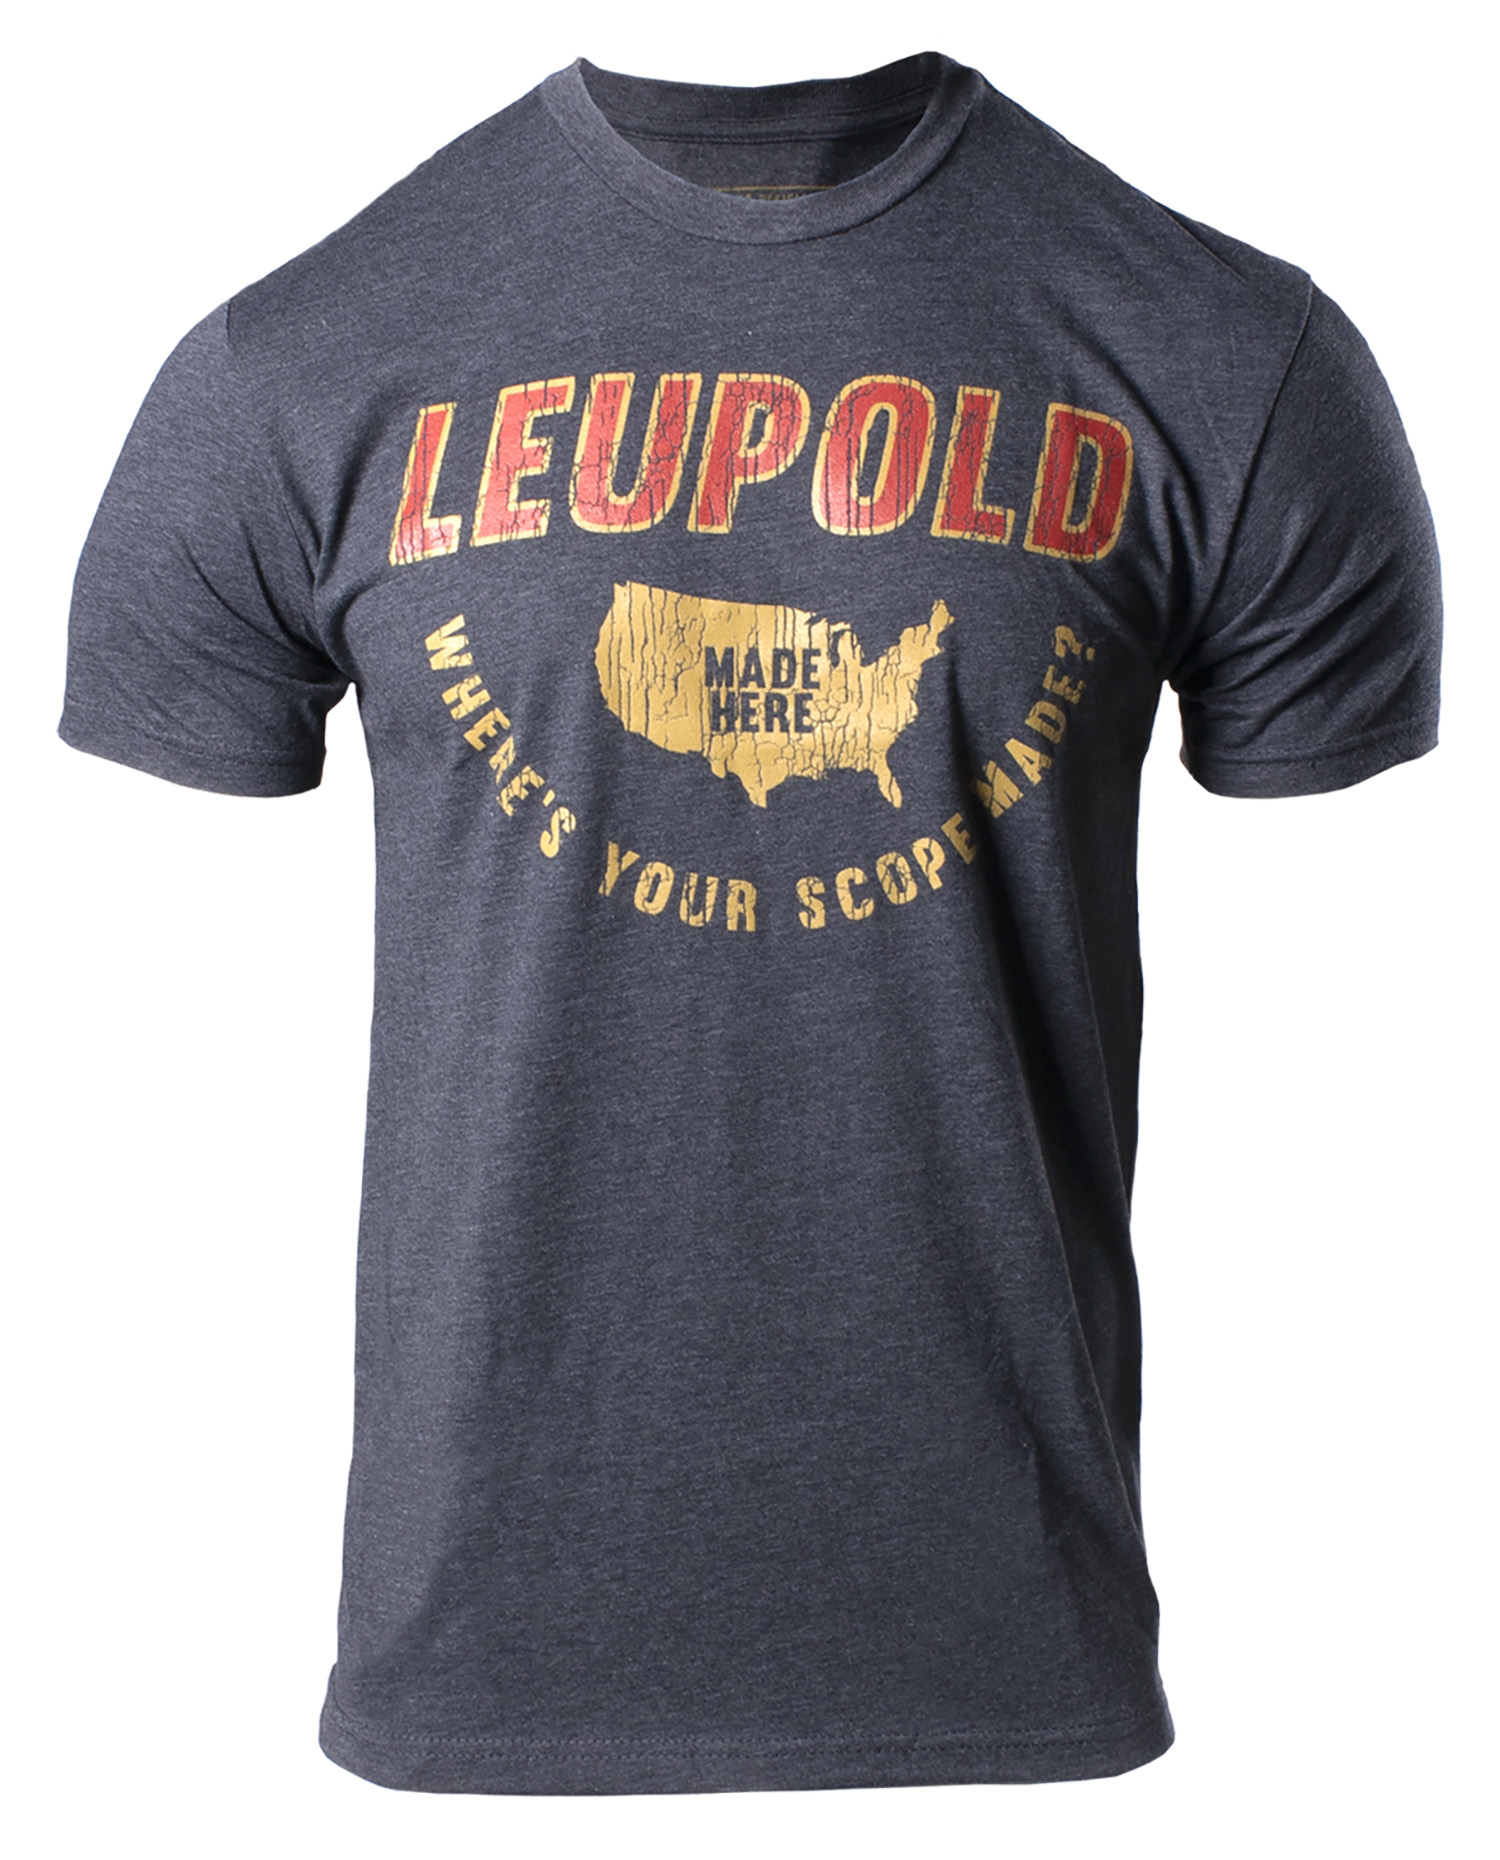 Leupold 180430 Made Here T-Shirt Charcoal Heather XL Short Sleeve